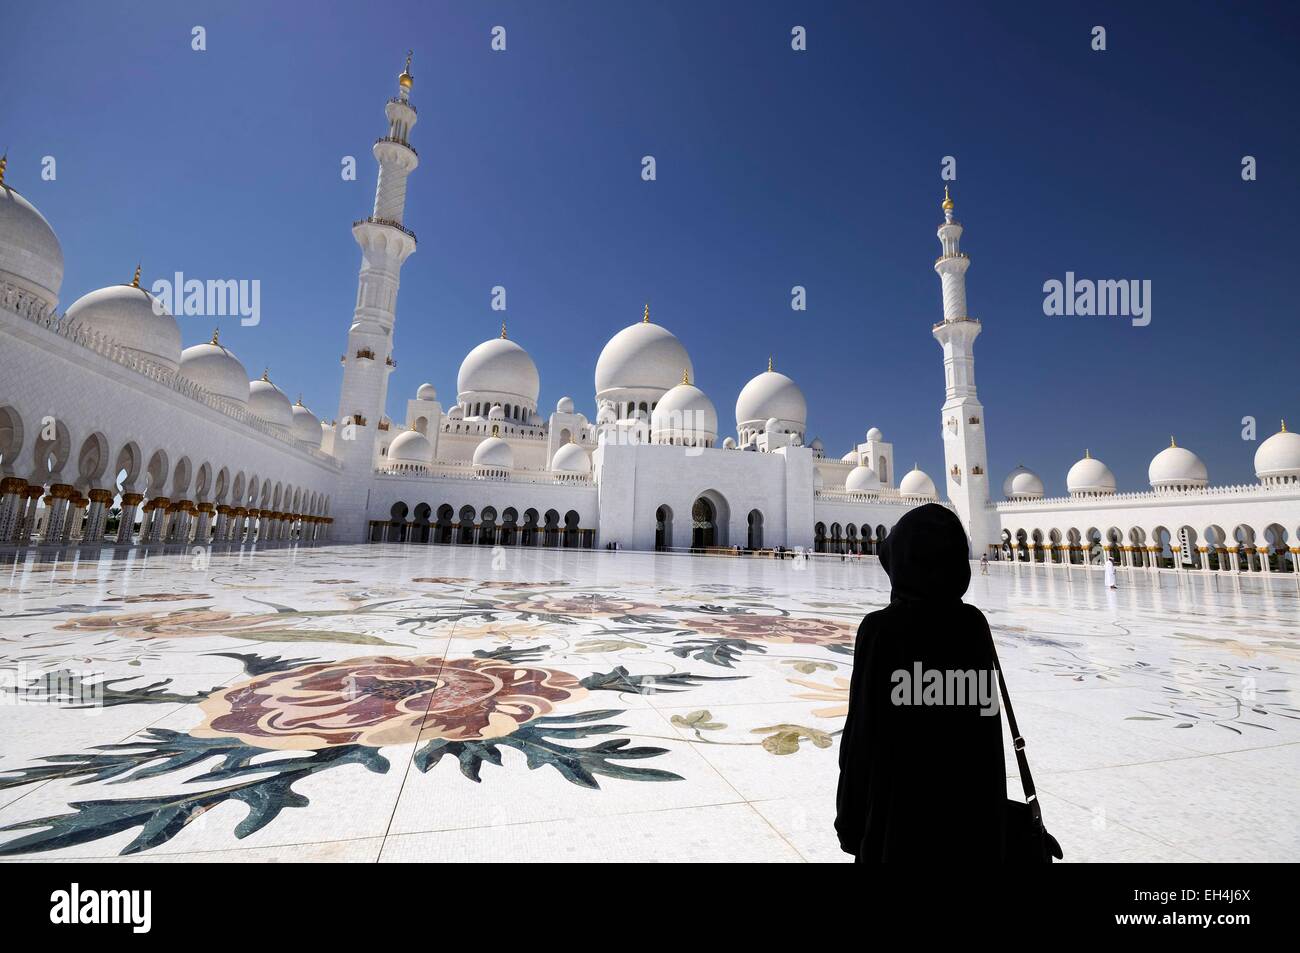 United Arab Emirates Abu Dhabi Sheikh Zayed Grand Mosque Woman Wearing An Abaya In The Mosque Courtyard Stock Photo Alamy